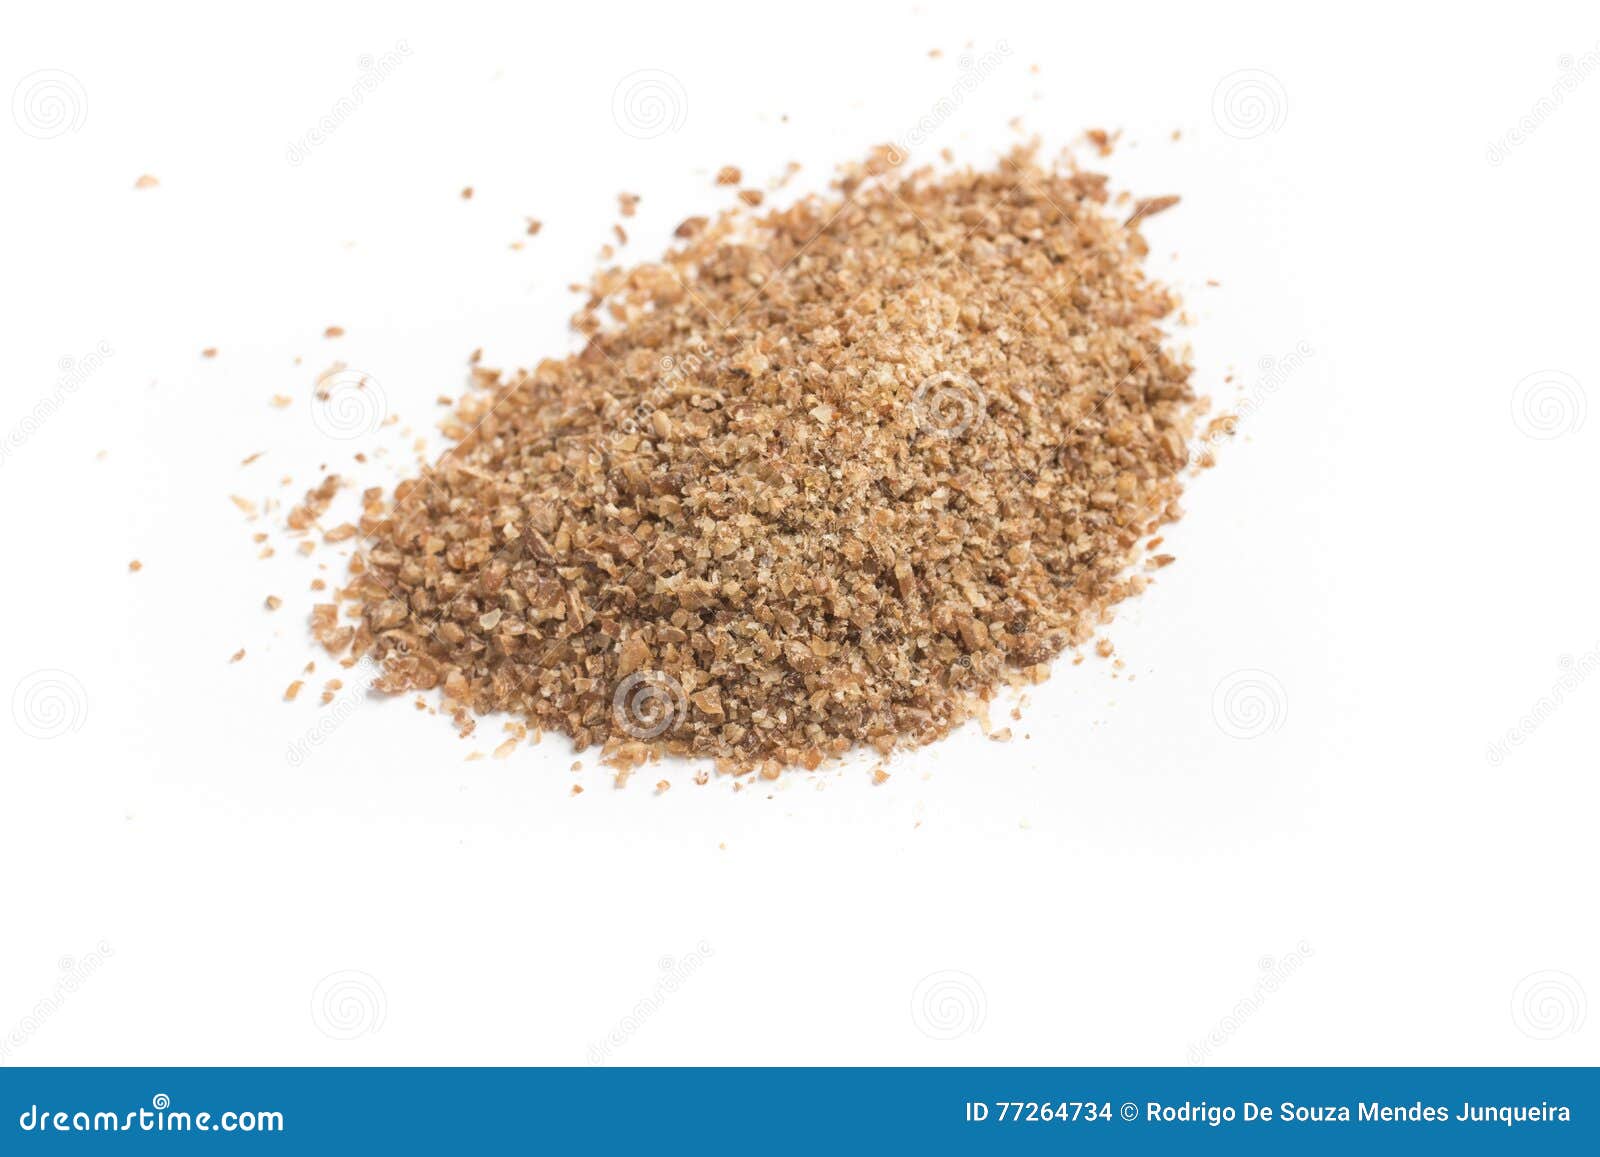 close-up on a ground wheat. trigo para quibe. kibbeh